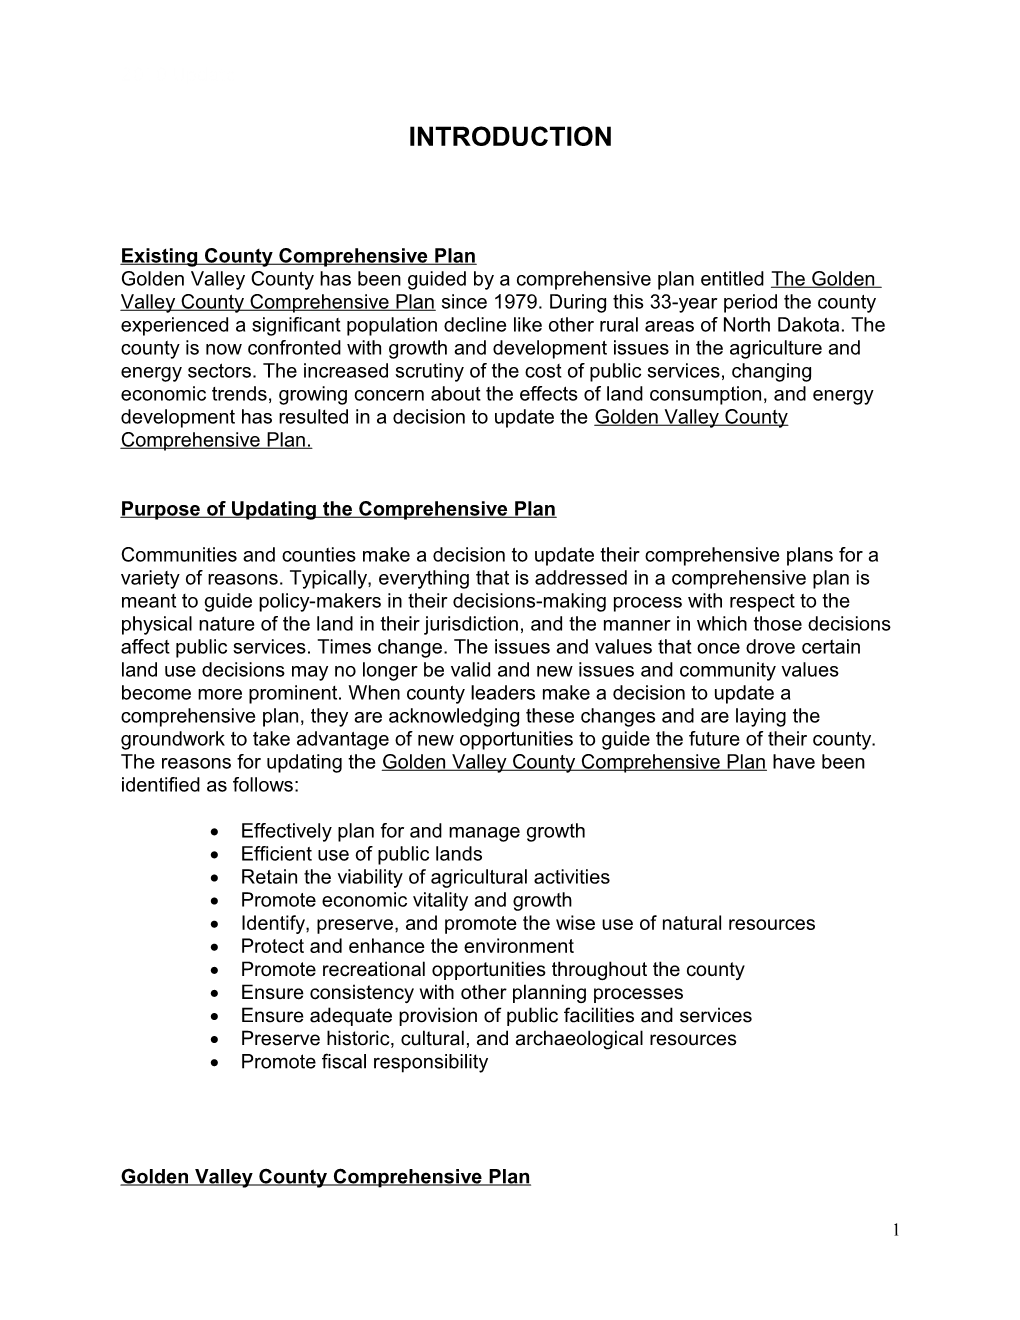 Olden Valley County Comprehensive Planplanupdate: 2012